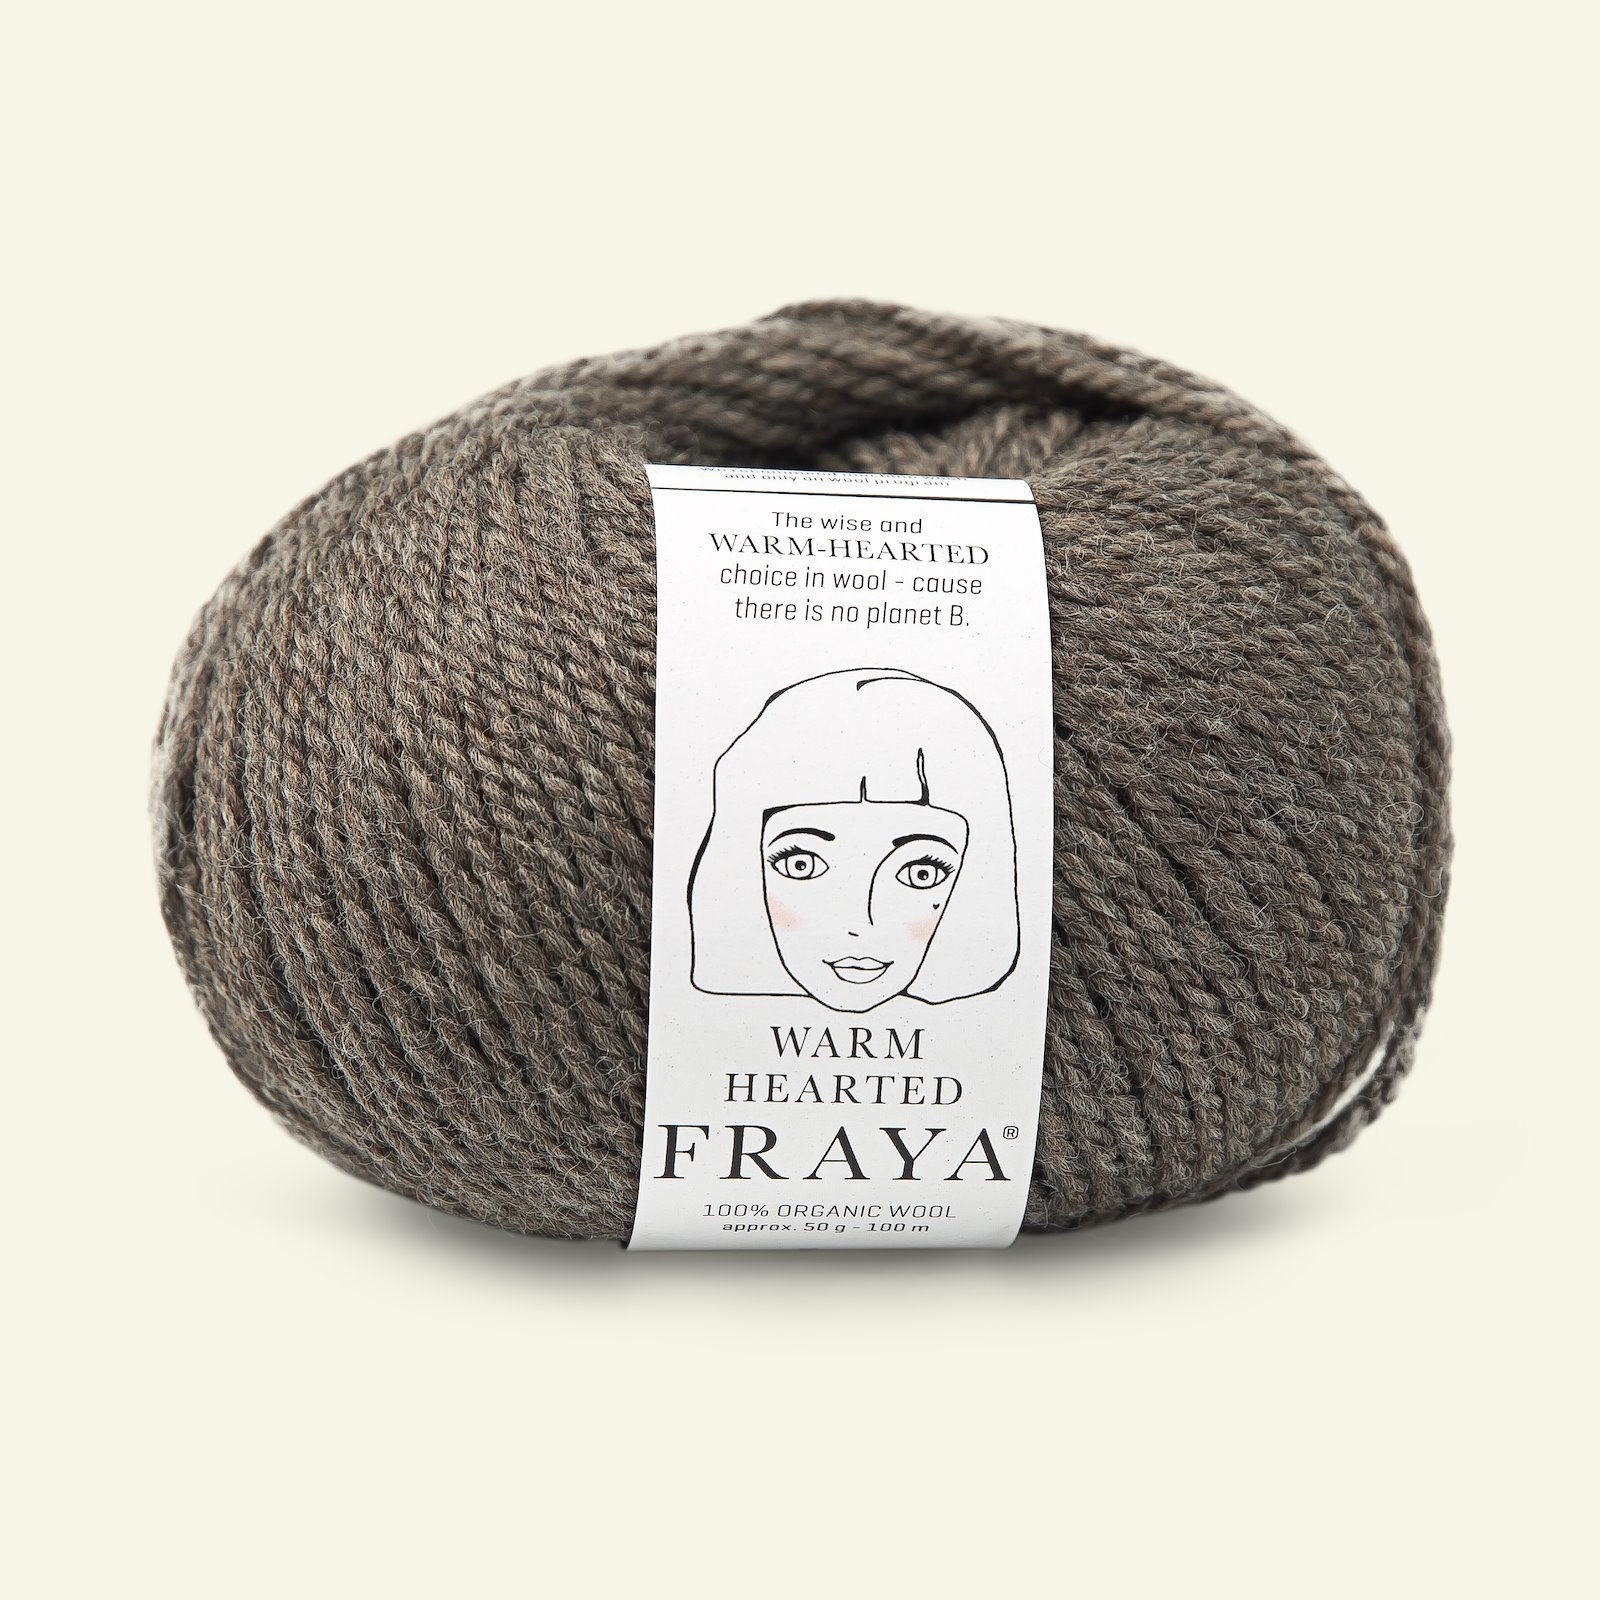 FRAYA, 100% organic wool "Warm hearted", grey/brown mel 90063139_pack